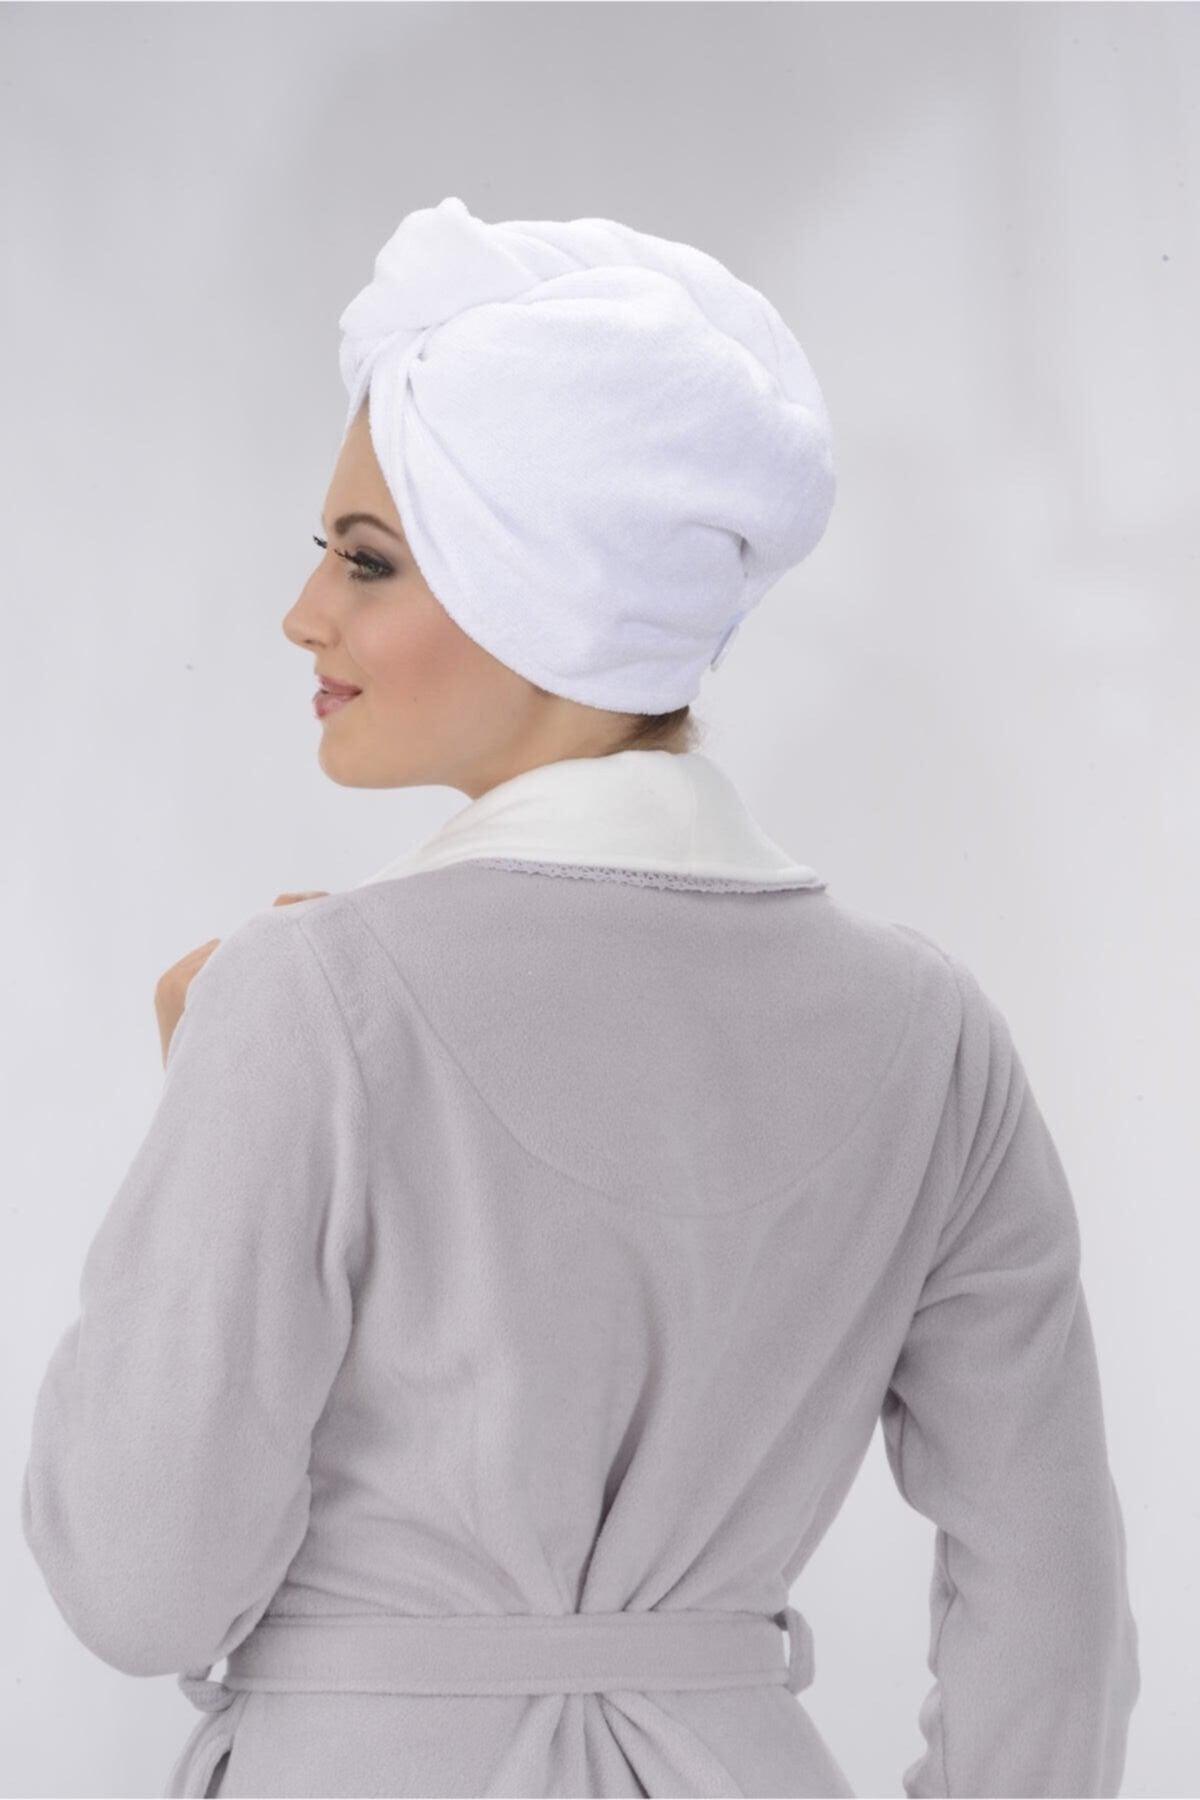 Towel Hair Drying Cap - Buttoned - Microfiber - White - Triple - Swordslife